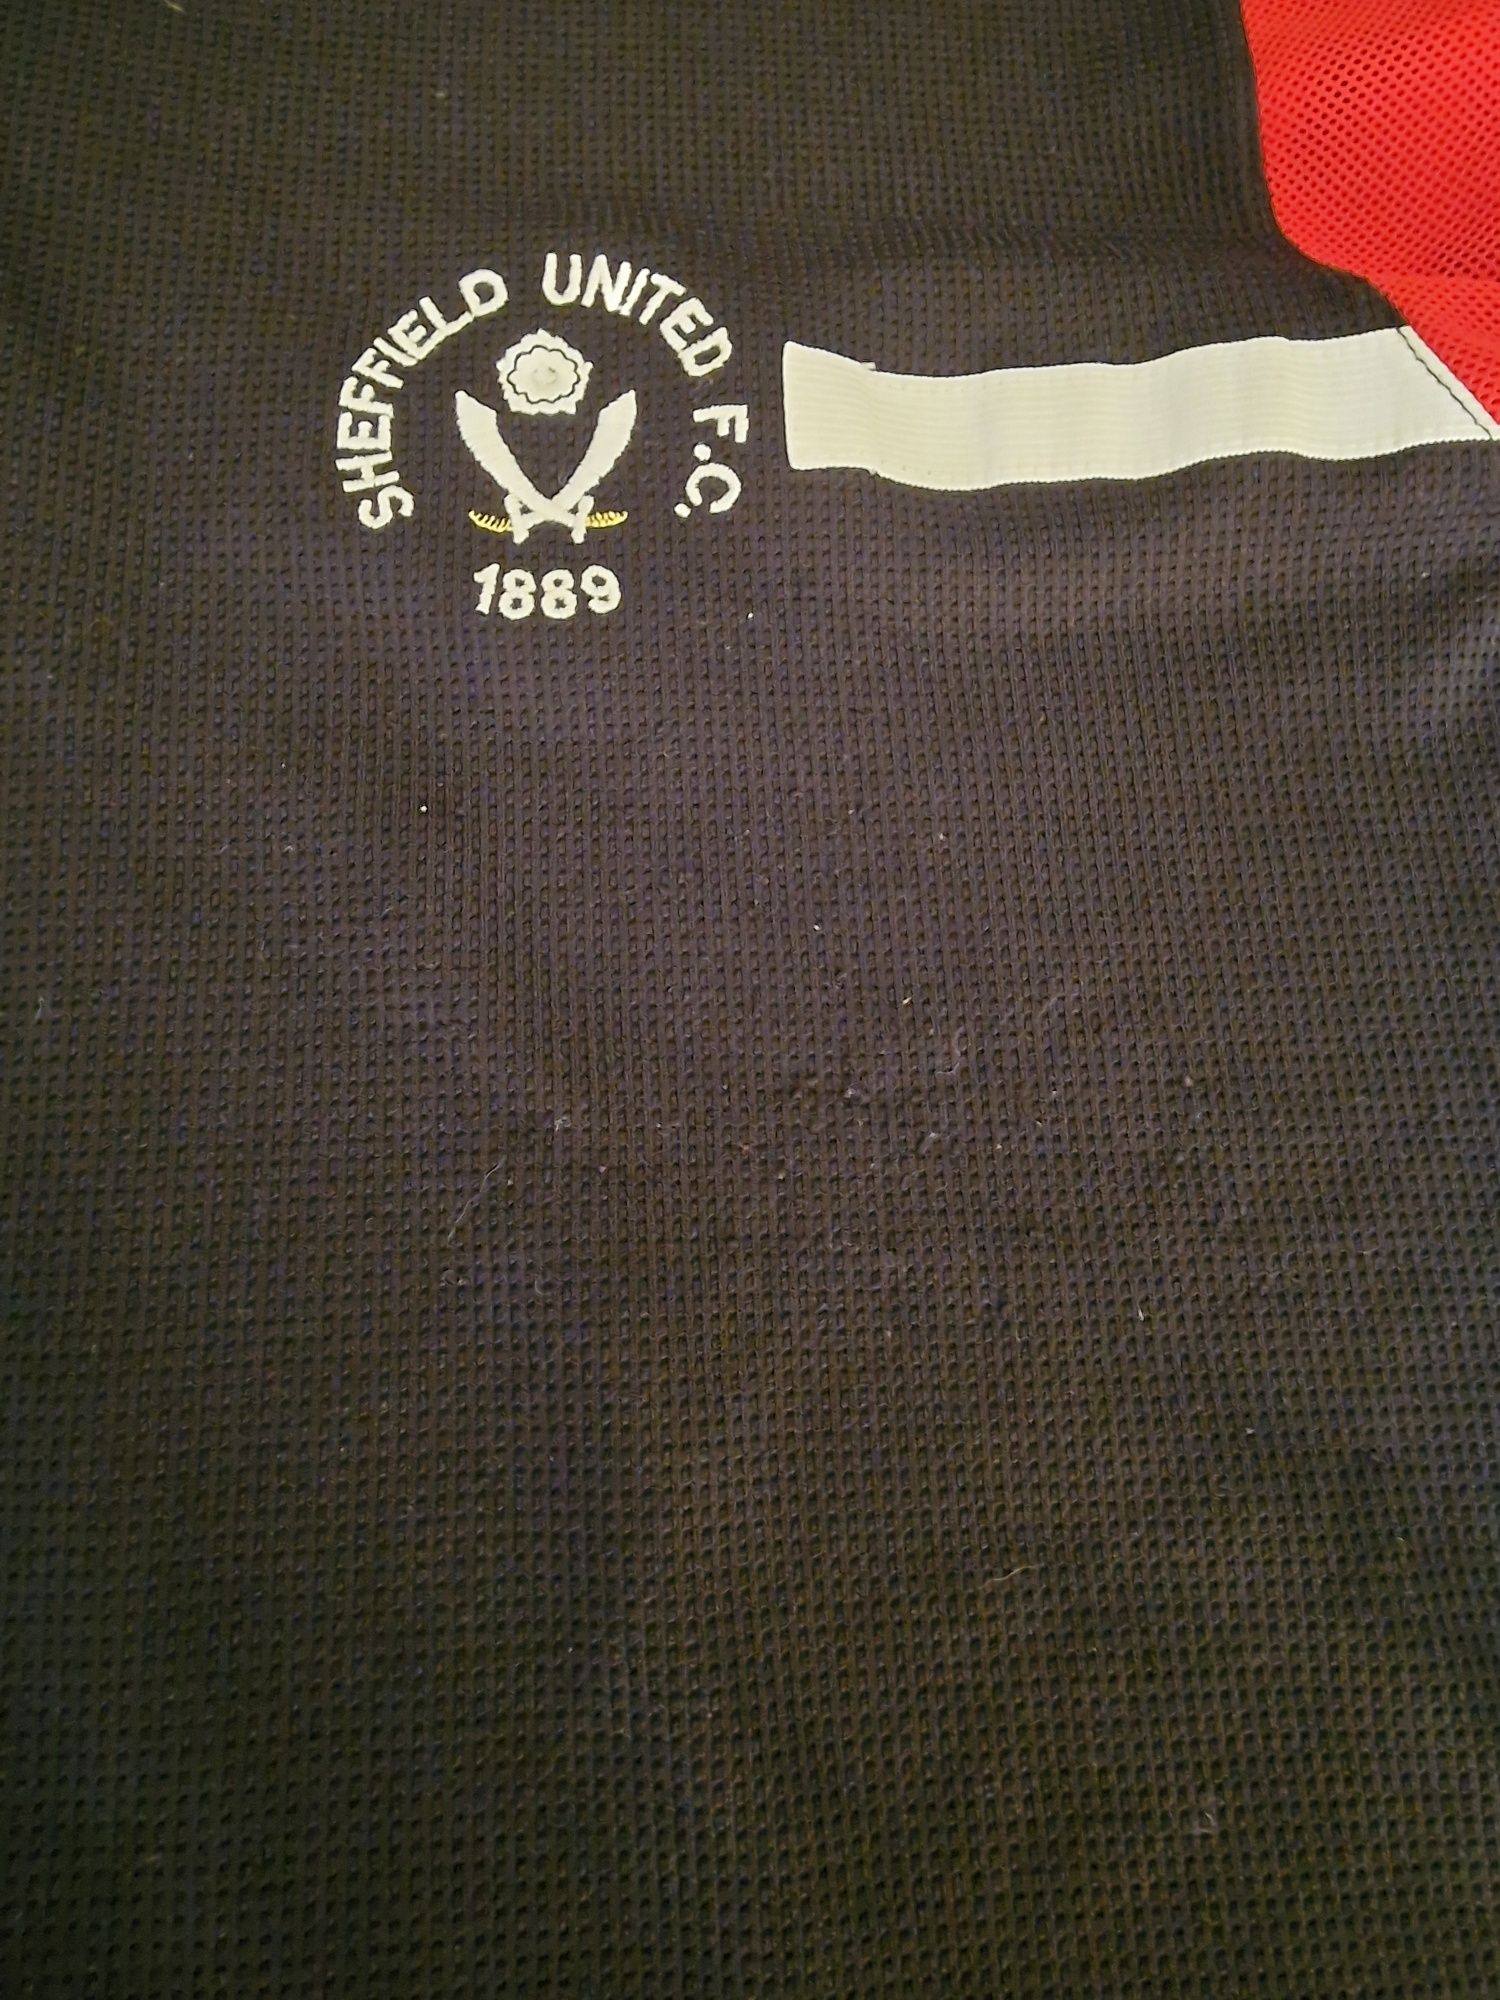 Le coq sportif Sheffield United vintage